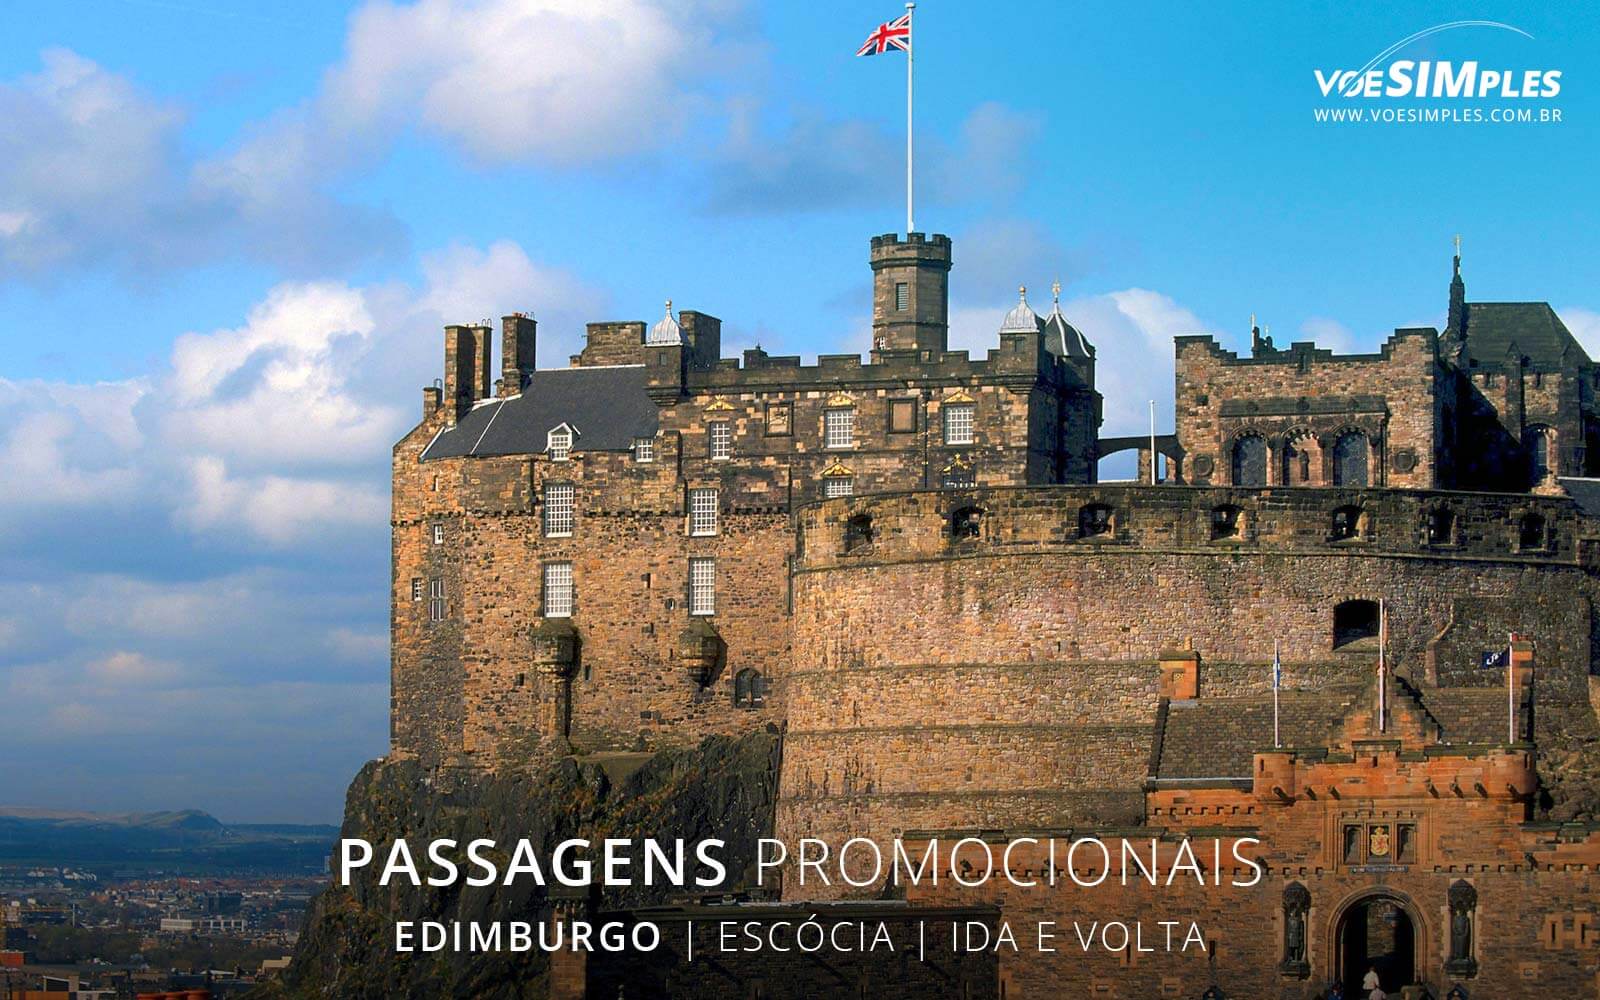 passagens-aereas-baratas-edimburgo-escocia-europa-voe-simples-passages-aereas-promocionais-escocia-passagens-promo-edimburgo